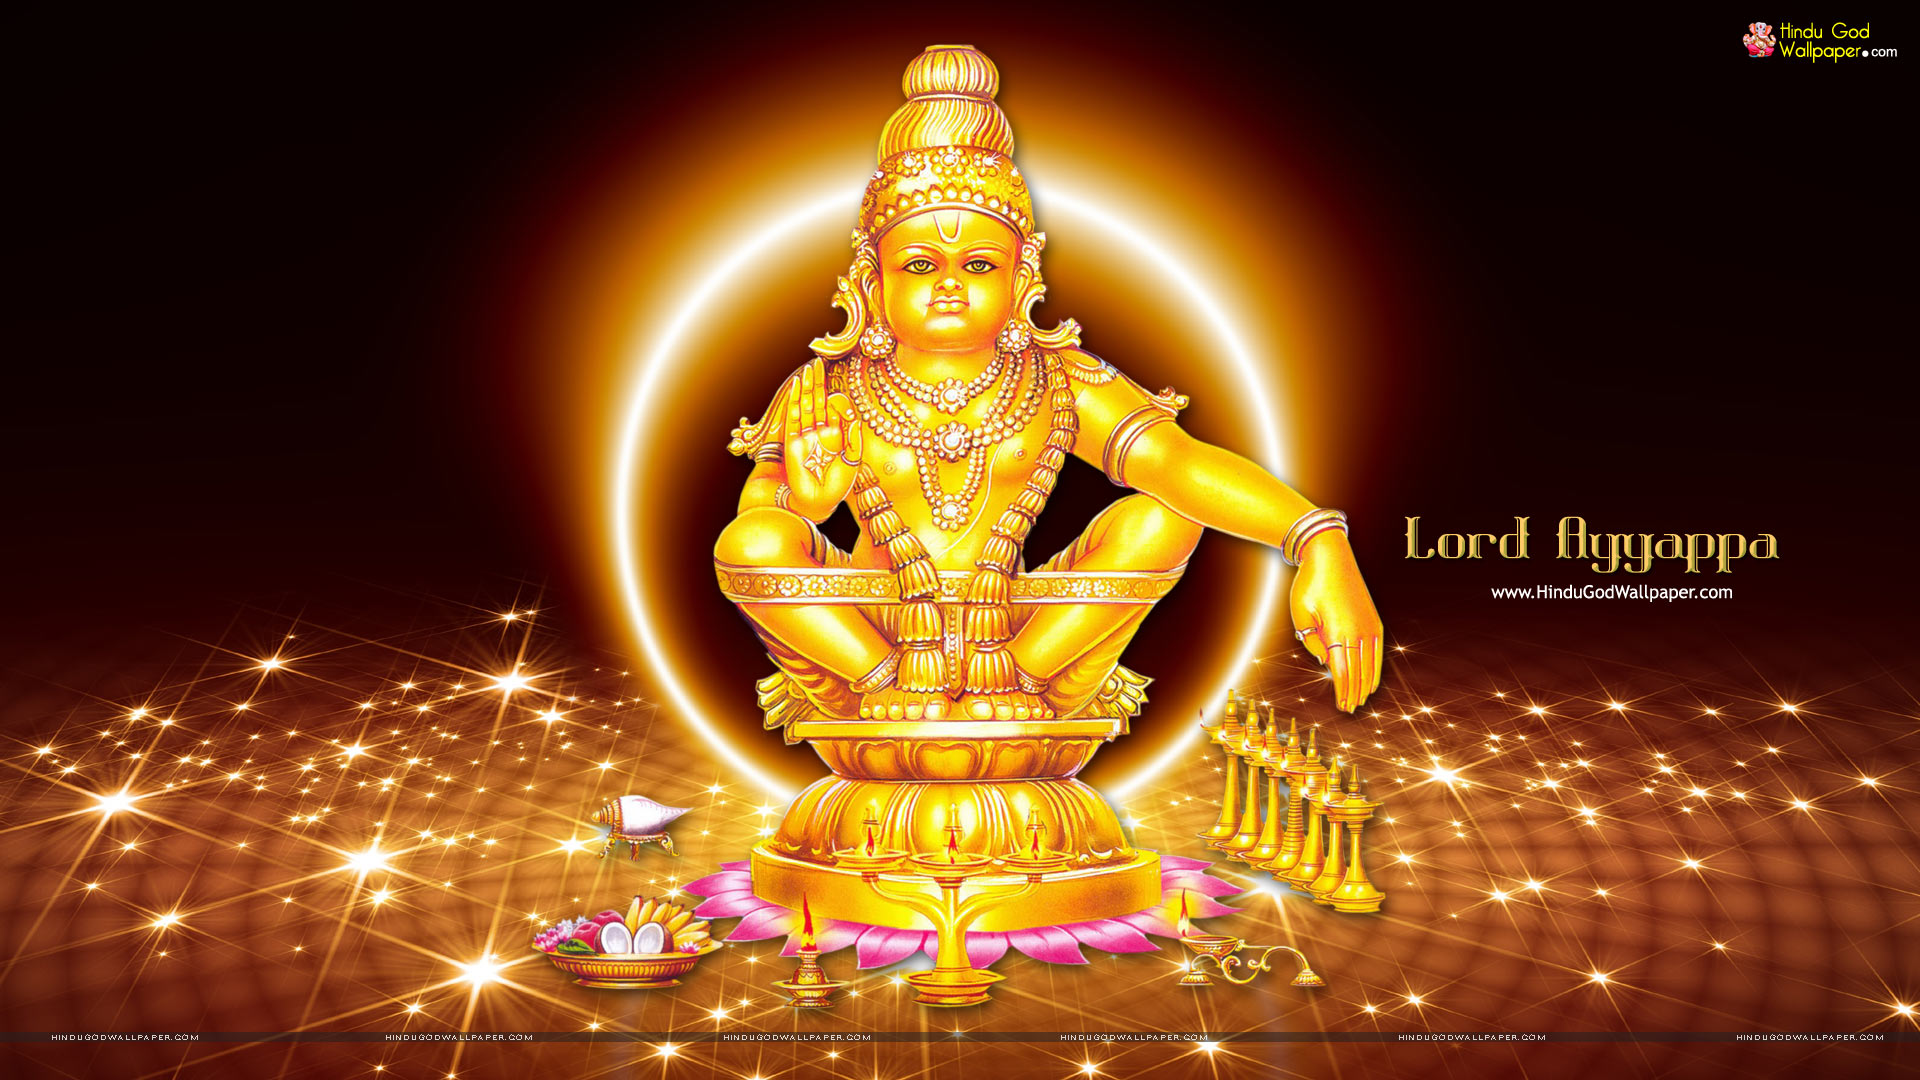 Hindu God Wallpapers: Lord Ayyappa Wallpapers, Photos & Images Download